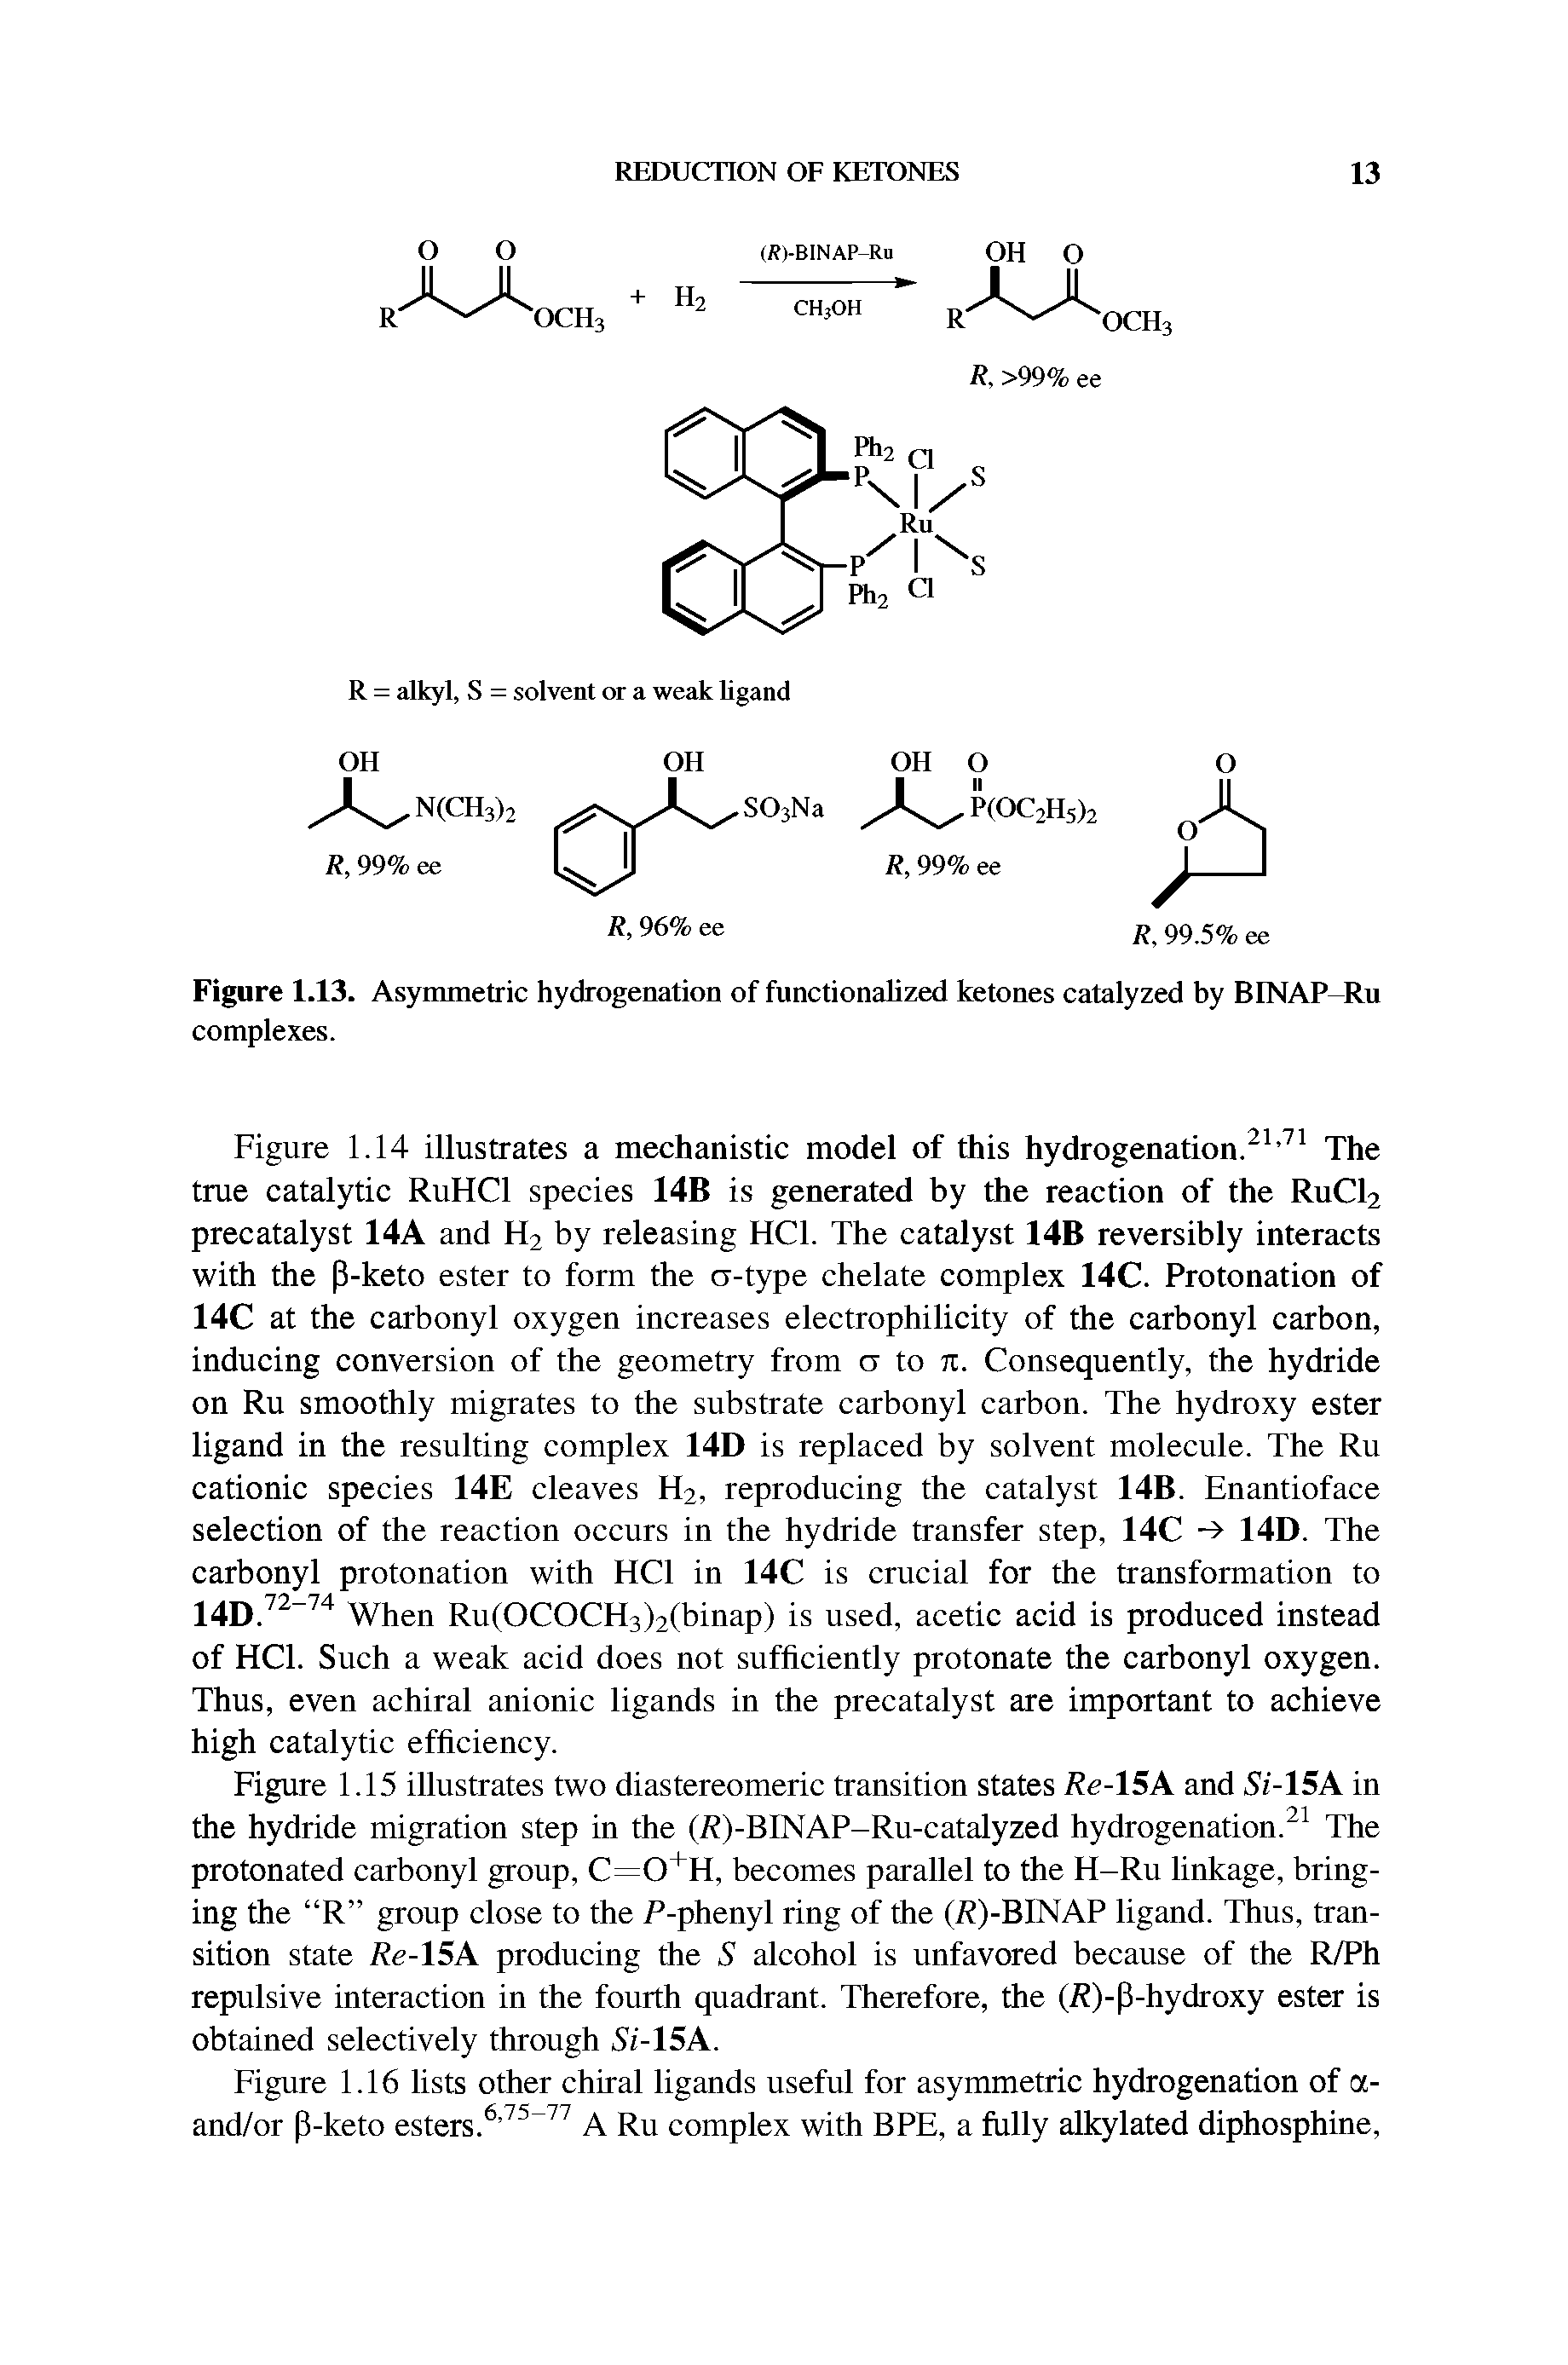 Figure 1.13. Asymmetric hydrogenation of functionalized ketones catalyzed by BINAP-Ru complexes.